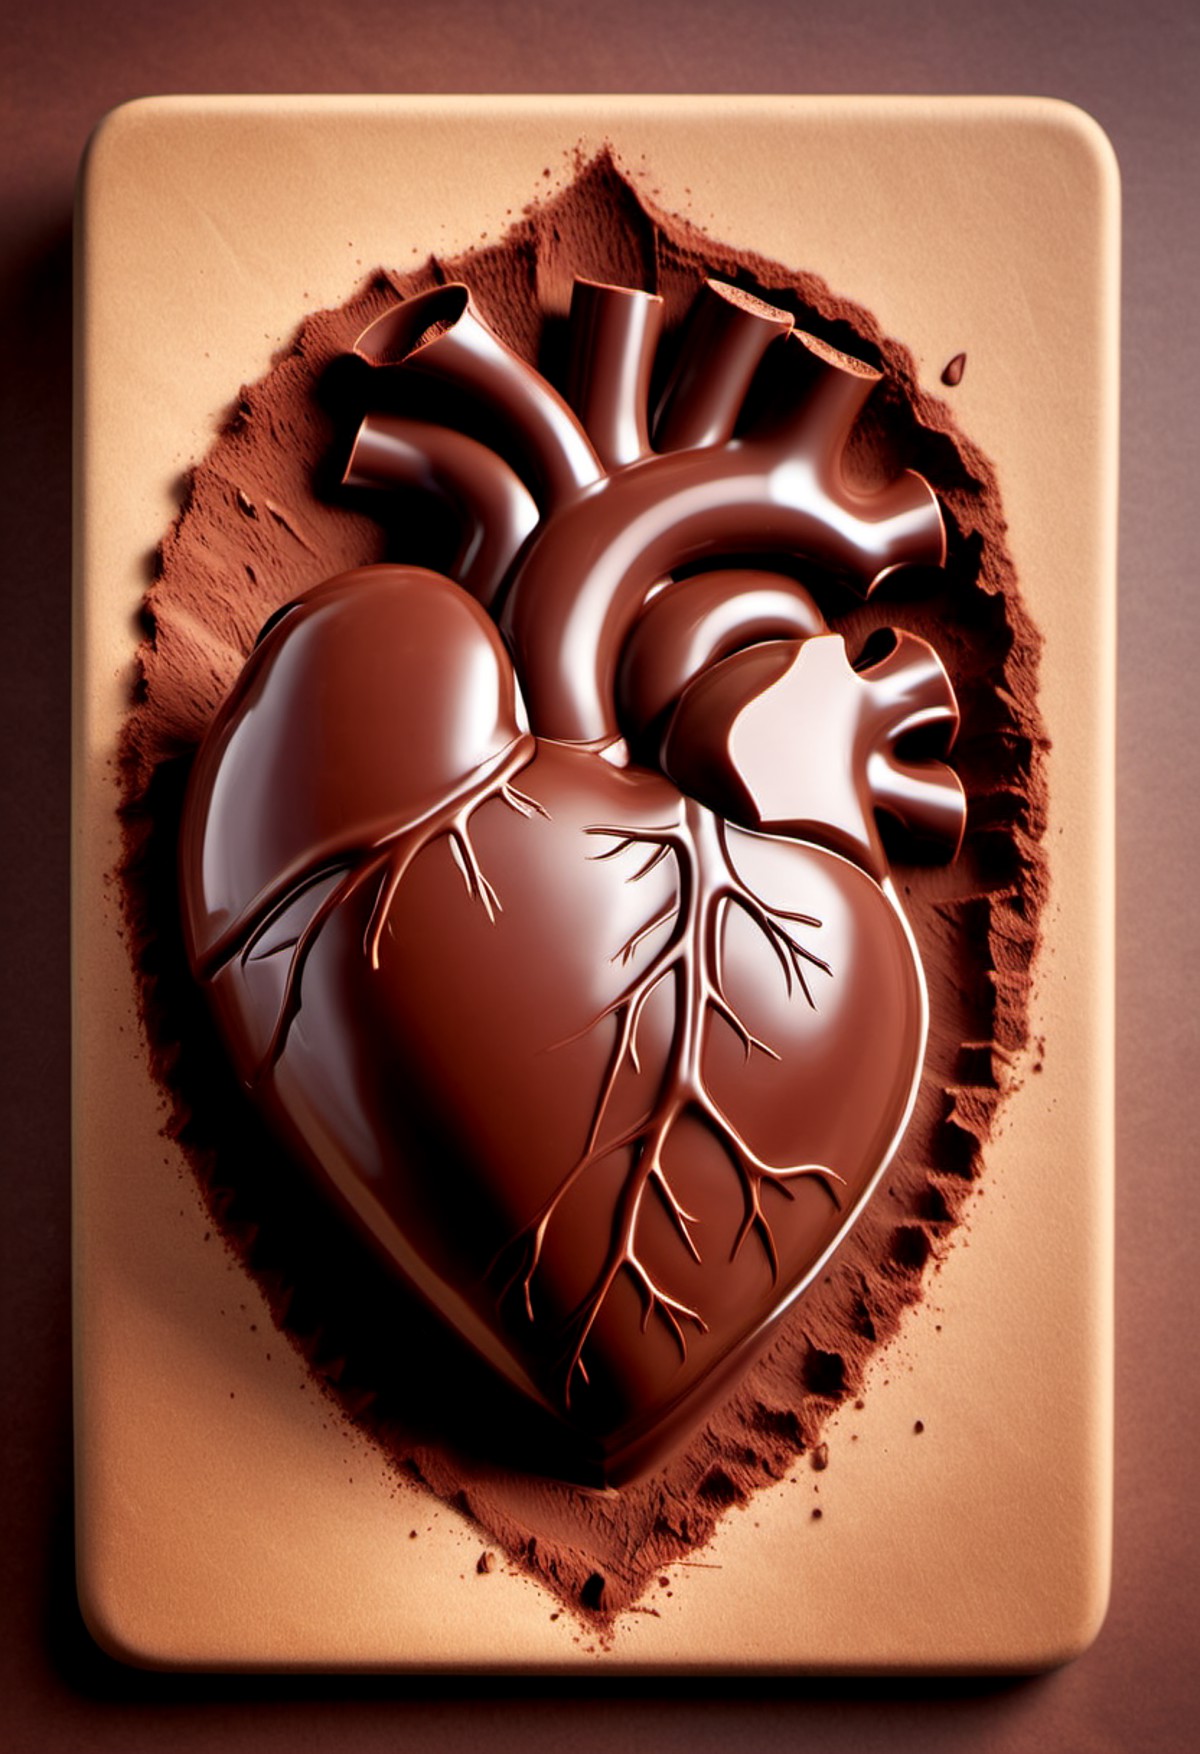 ChocolateRay, biological heart made of chocolate